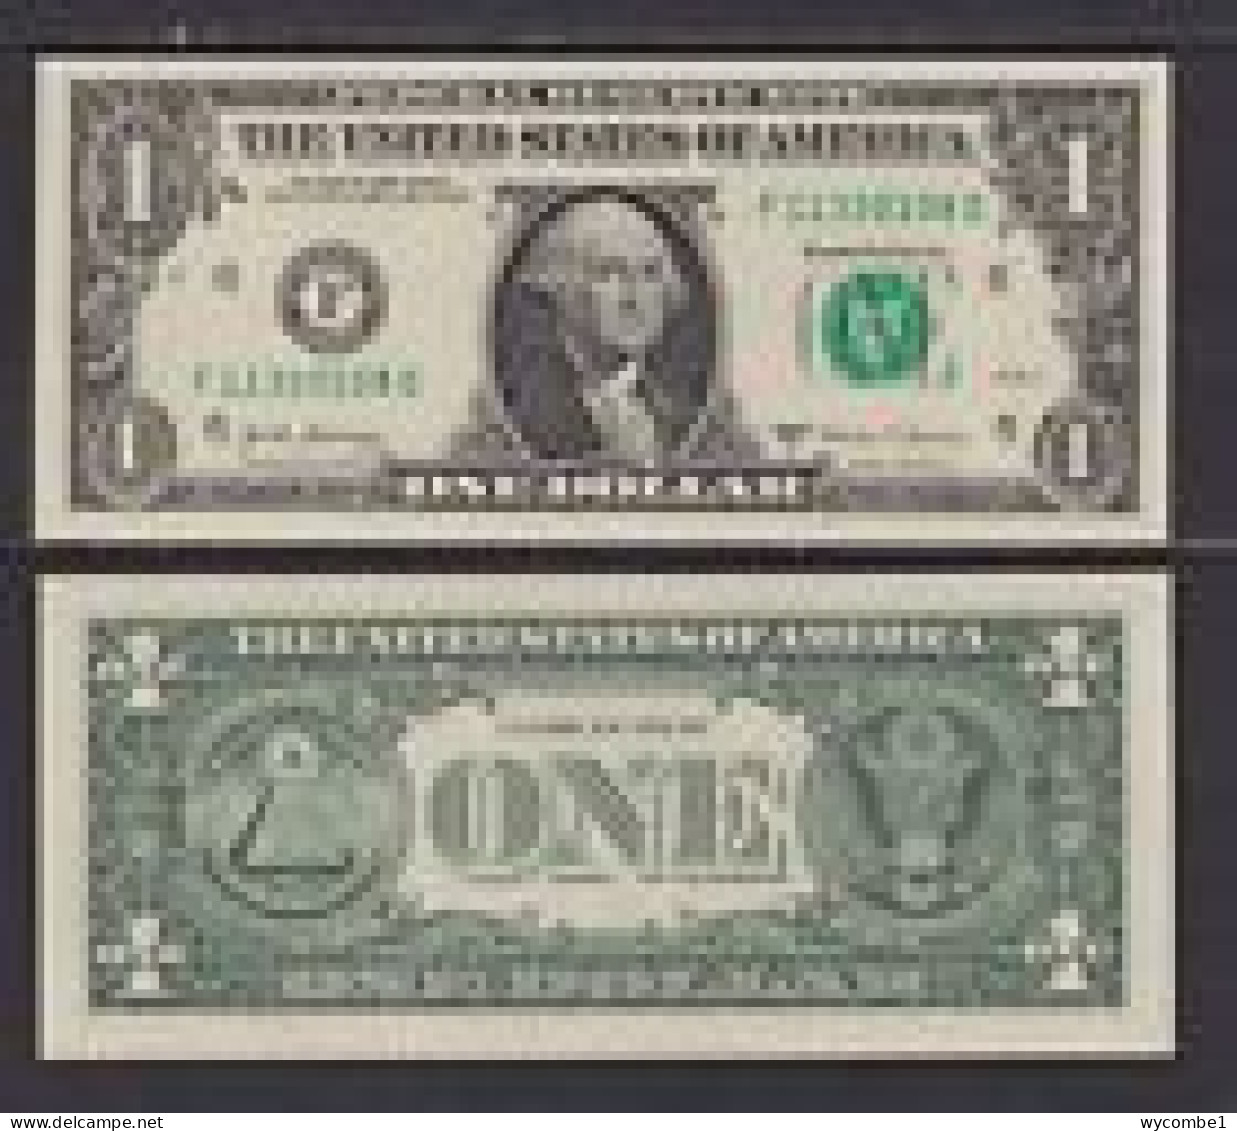 UNITED STATES - 2017 1 Dollar Series F Atlanta UNC - Biljetten Van De Verenigde Staten (1928-1953)